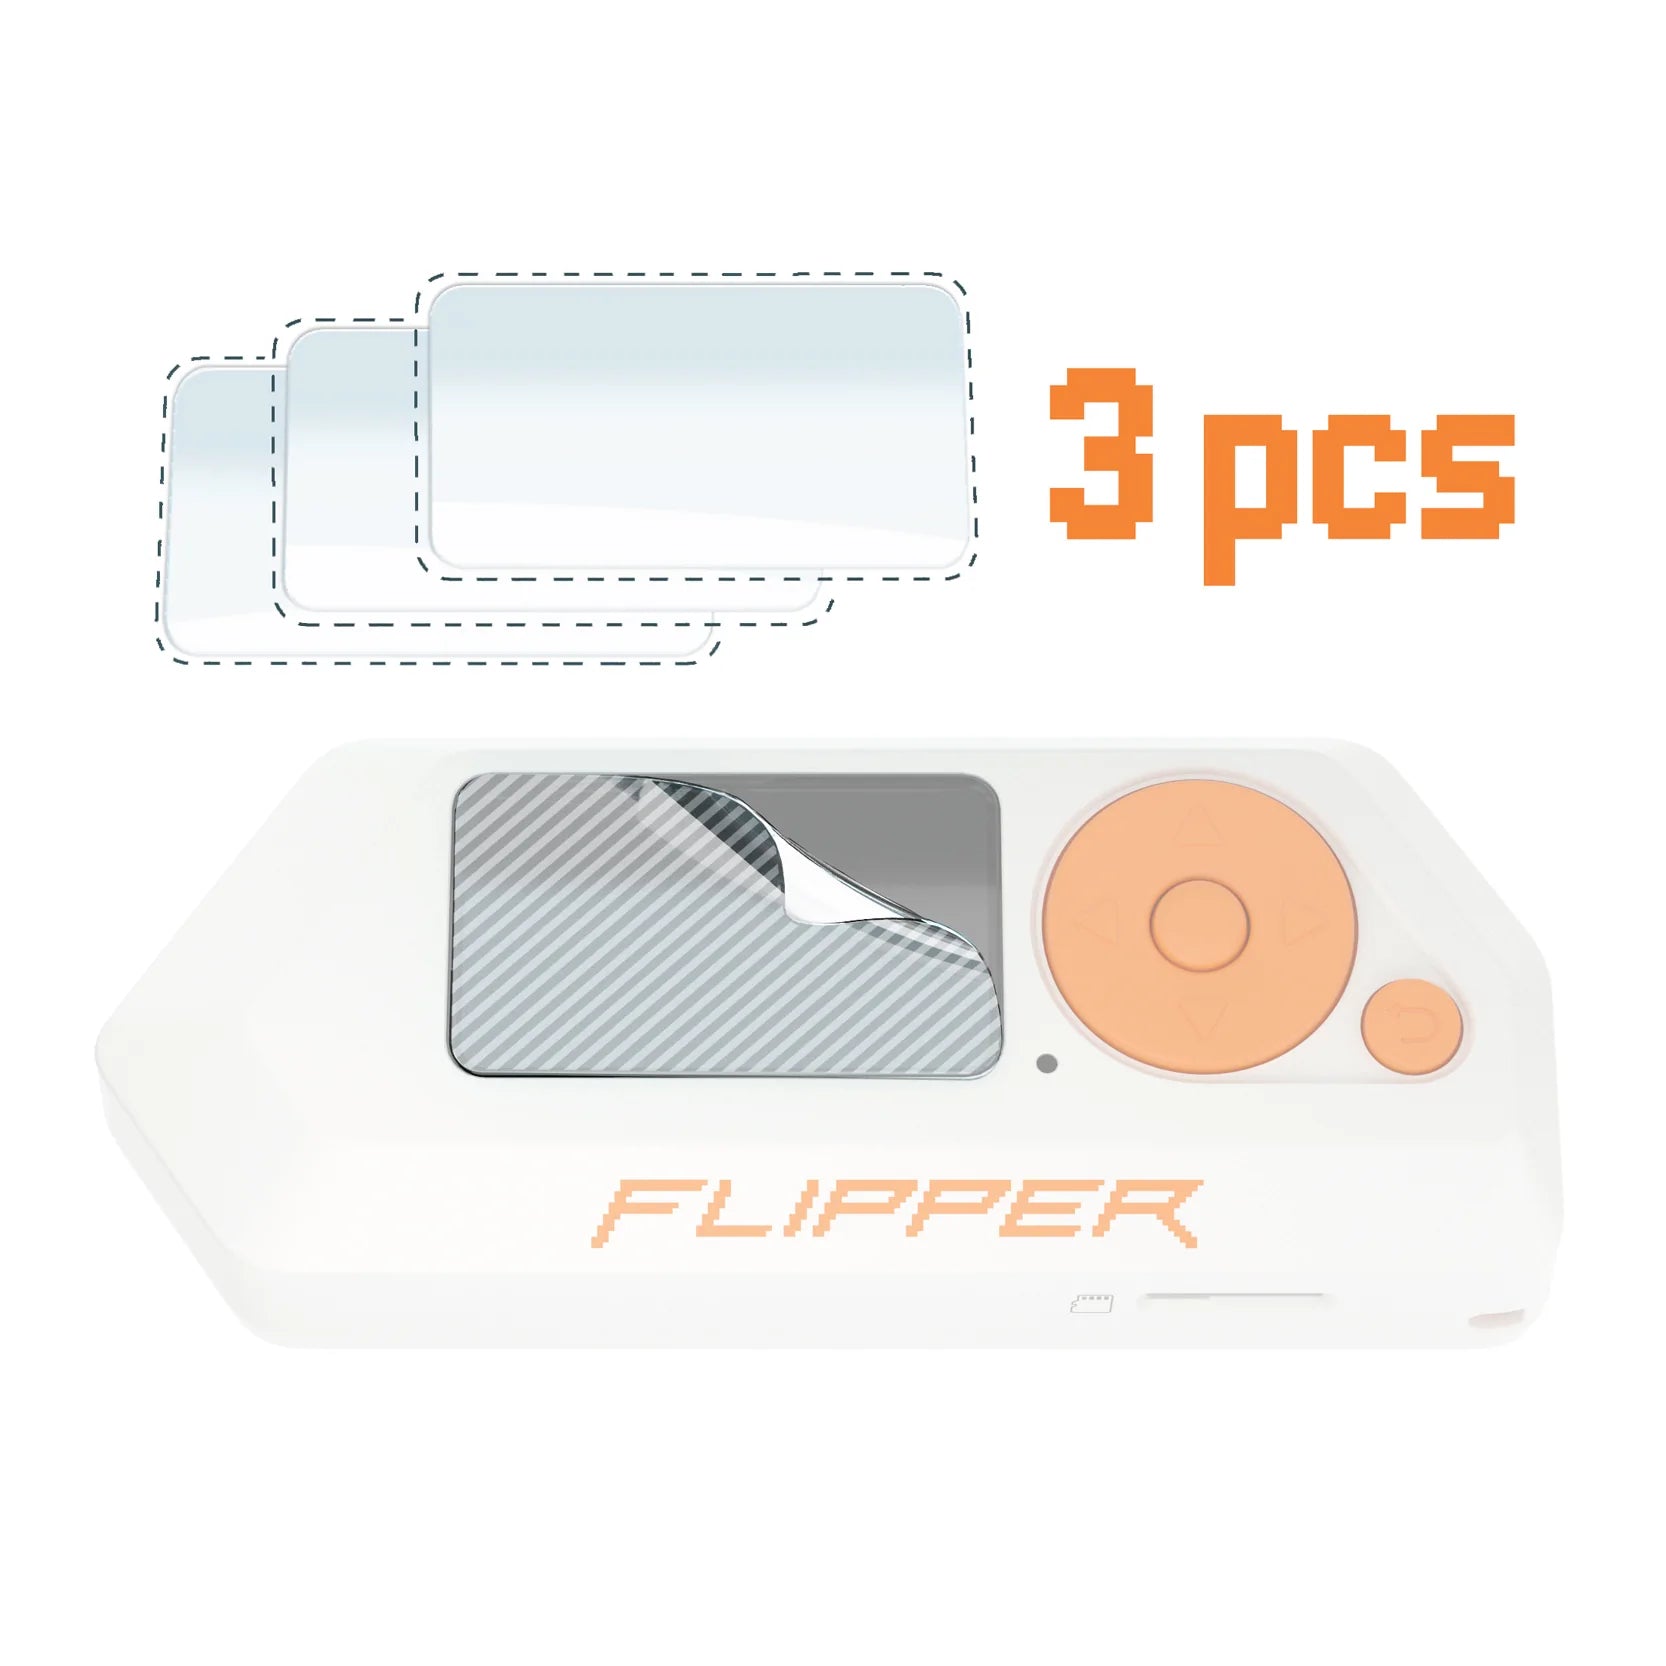 Flipper Zero – Lab401